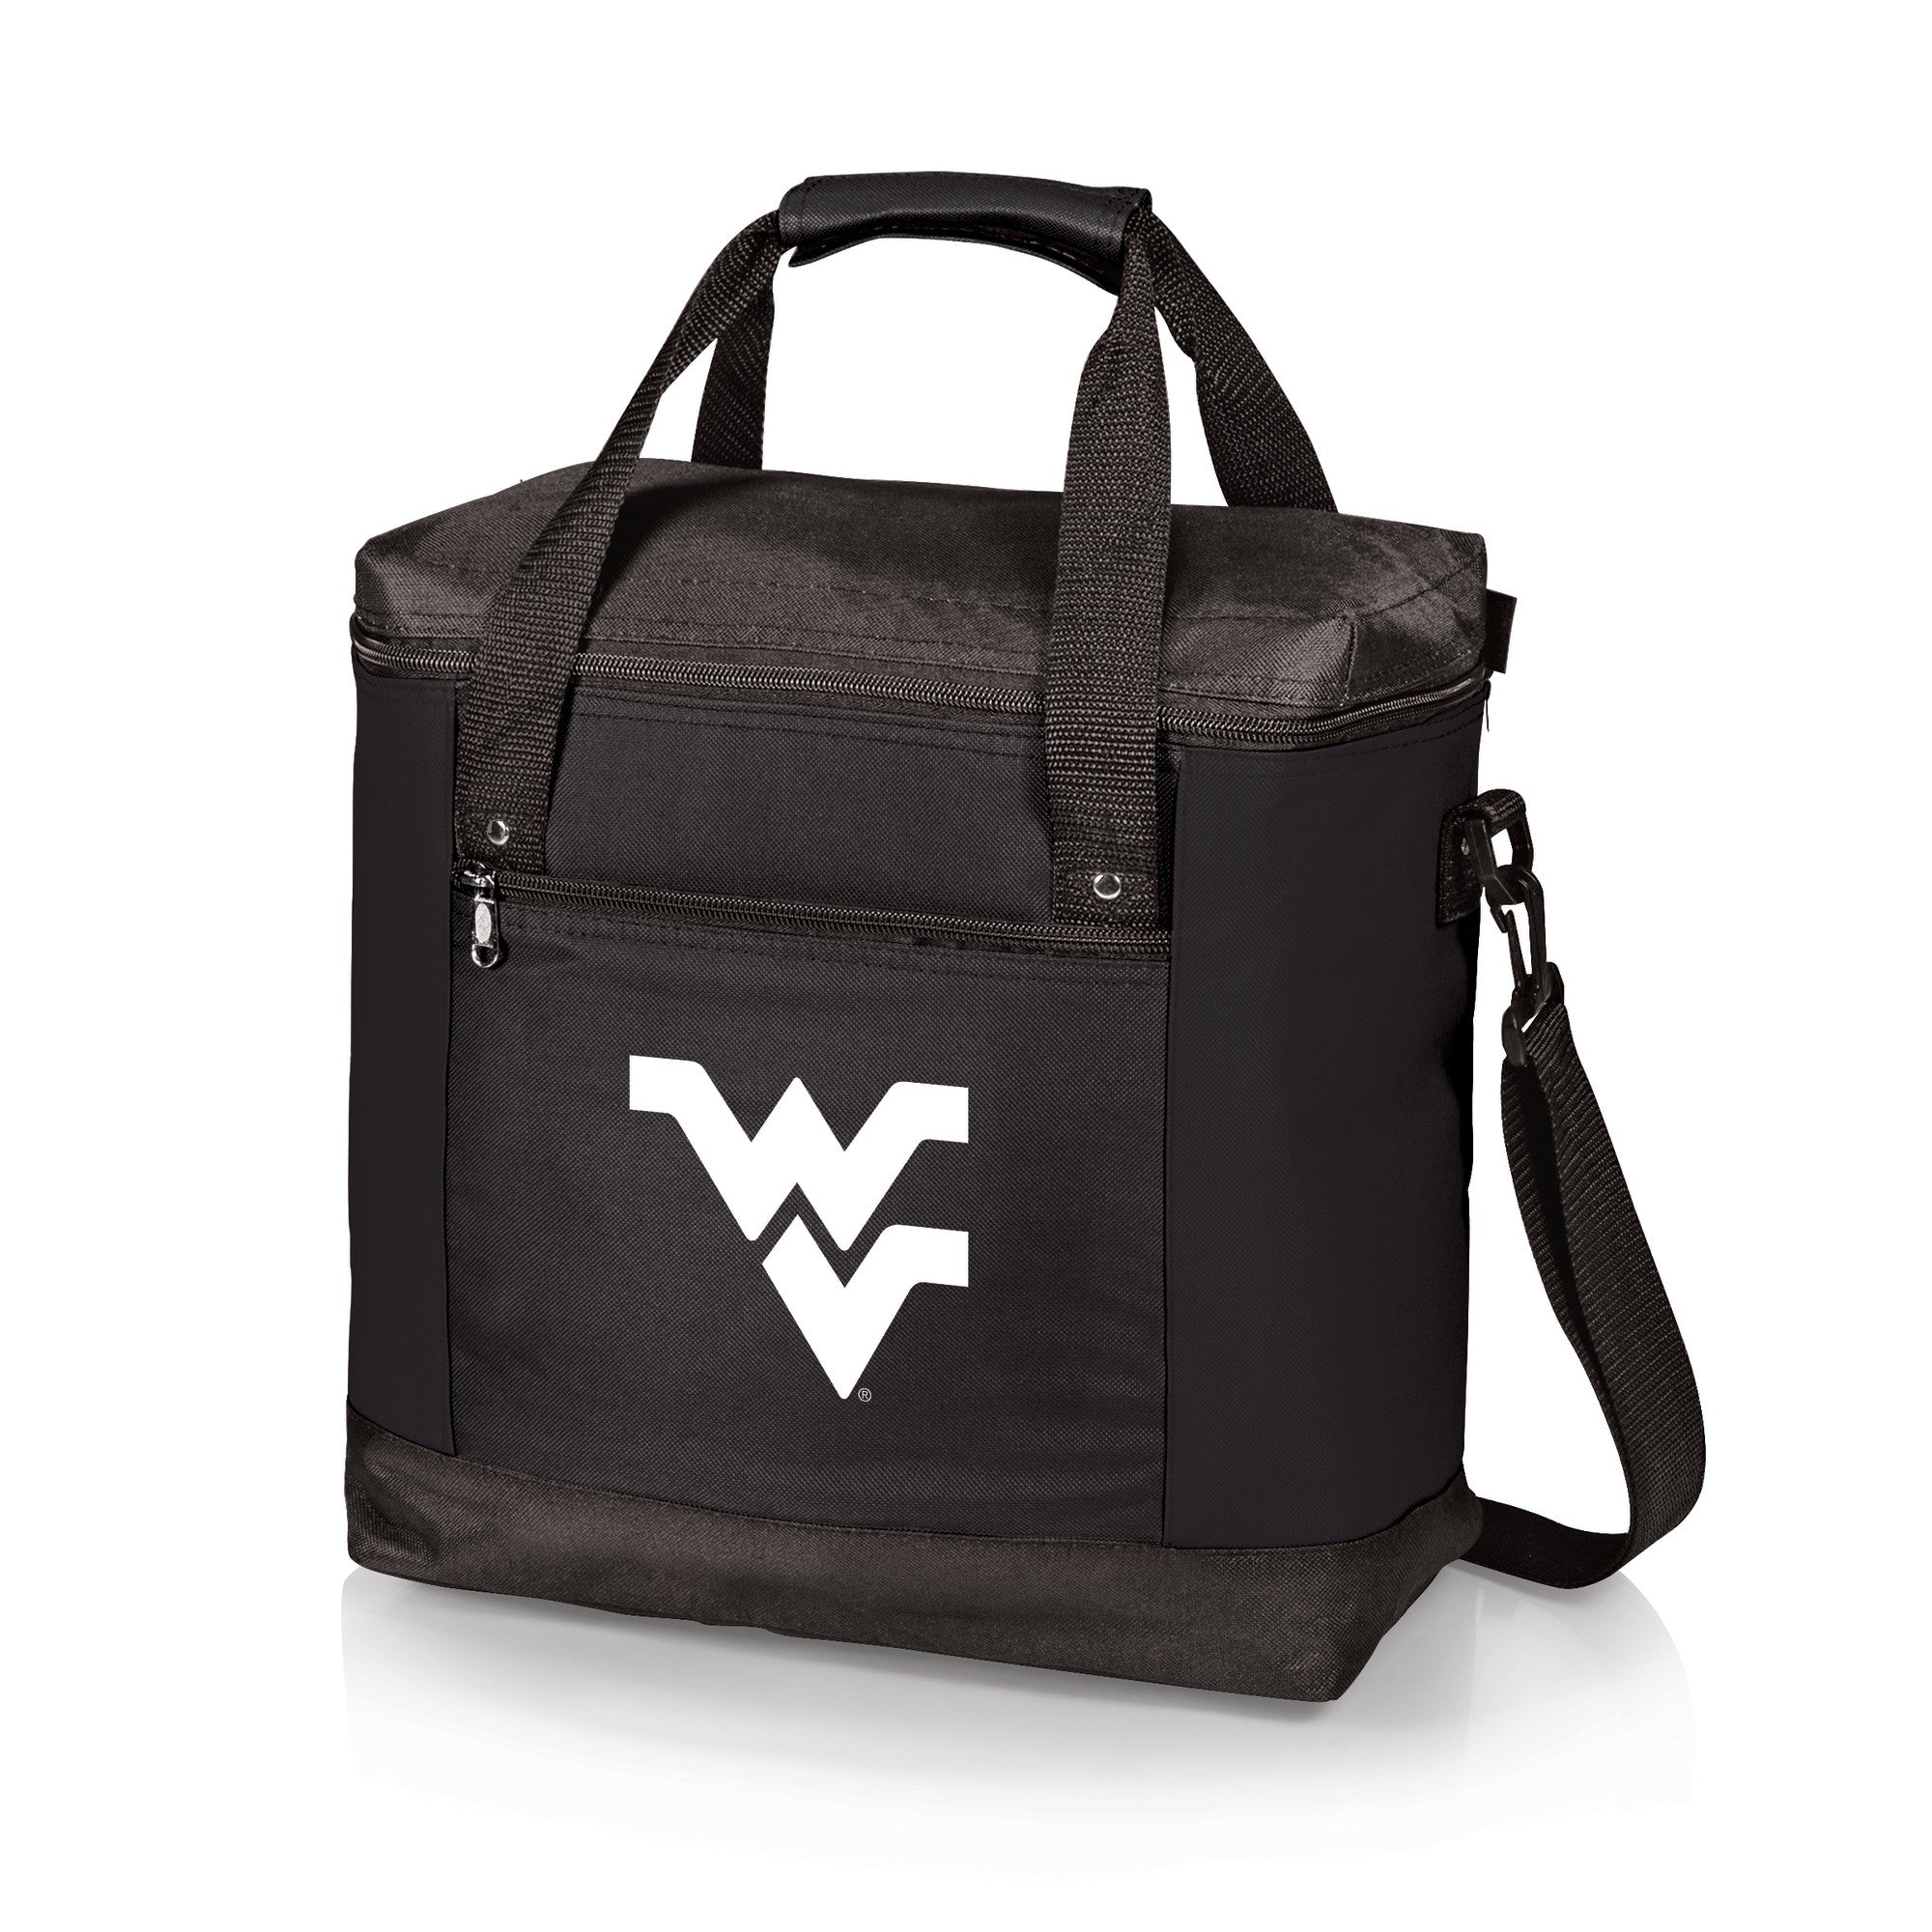 West Virginia Mountaineers - Montero Cooler Tote Bag